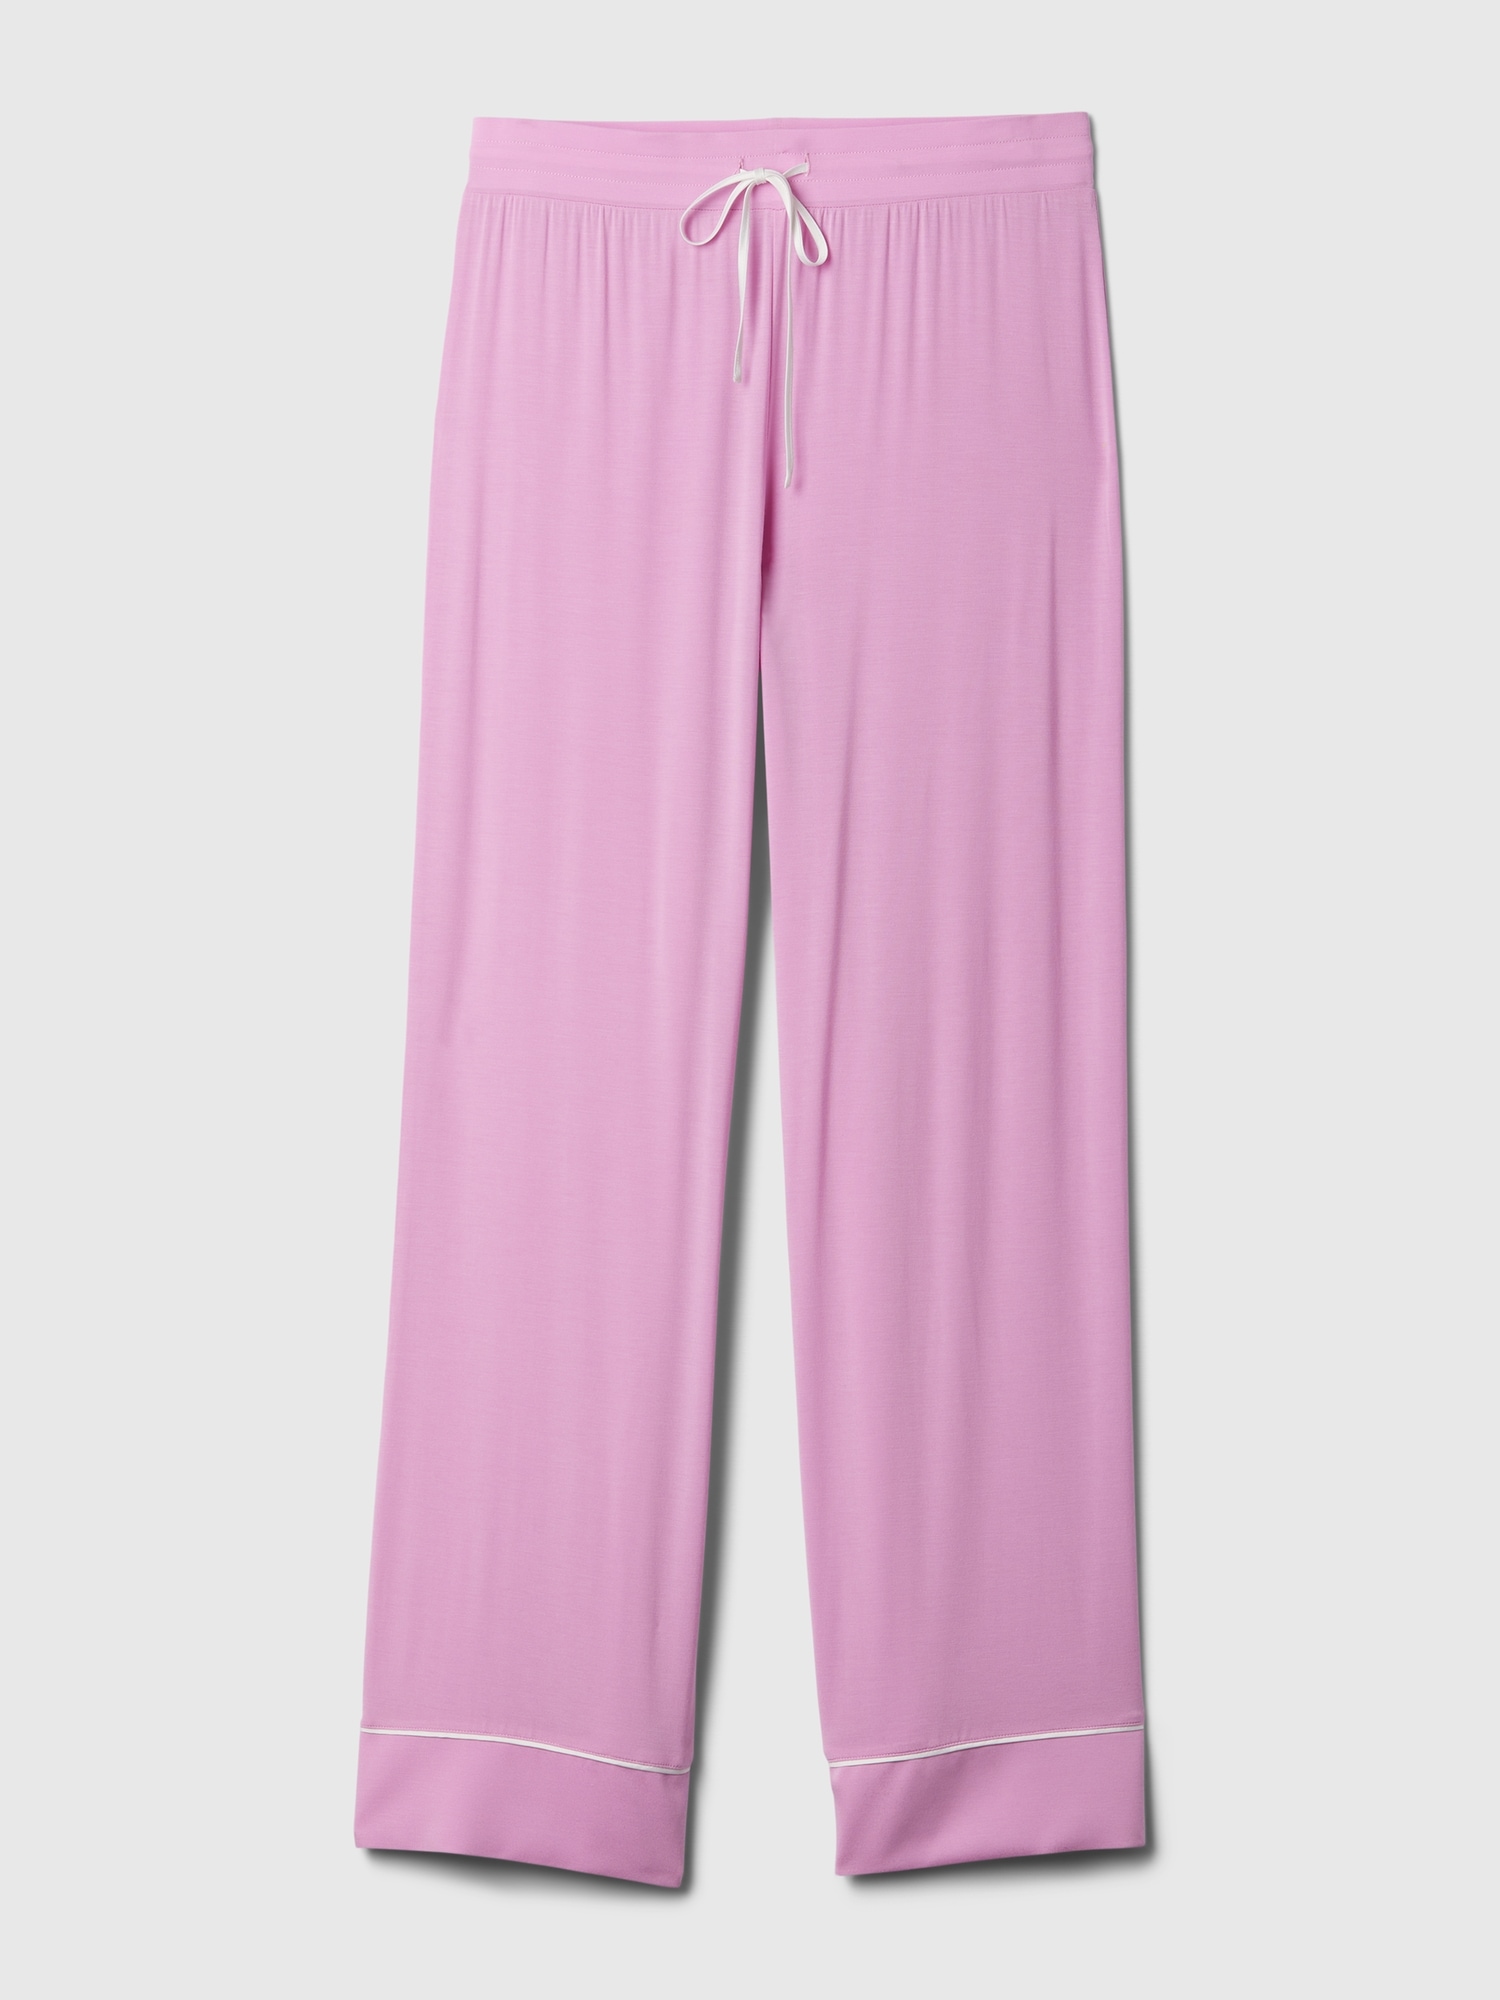 Comfy and Stylish 100% Cotton Pajama Pants for Women